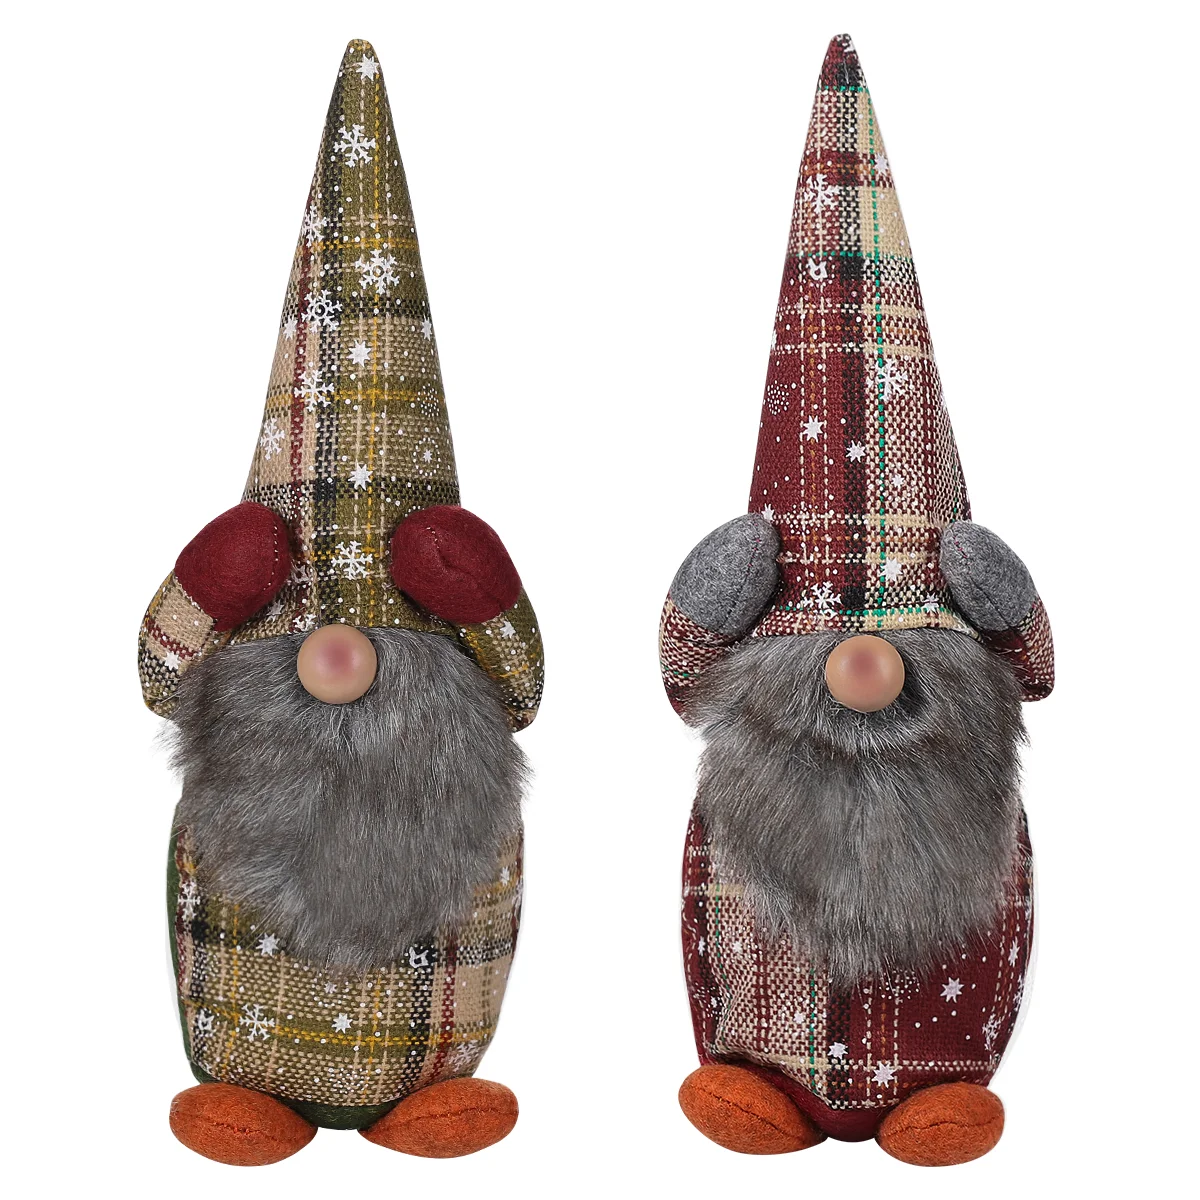 

Desktop Gnome Xmas Party Tree Decoration Christmas Ornaments Snowglobe Plush Toy